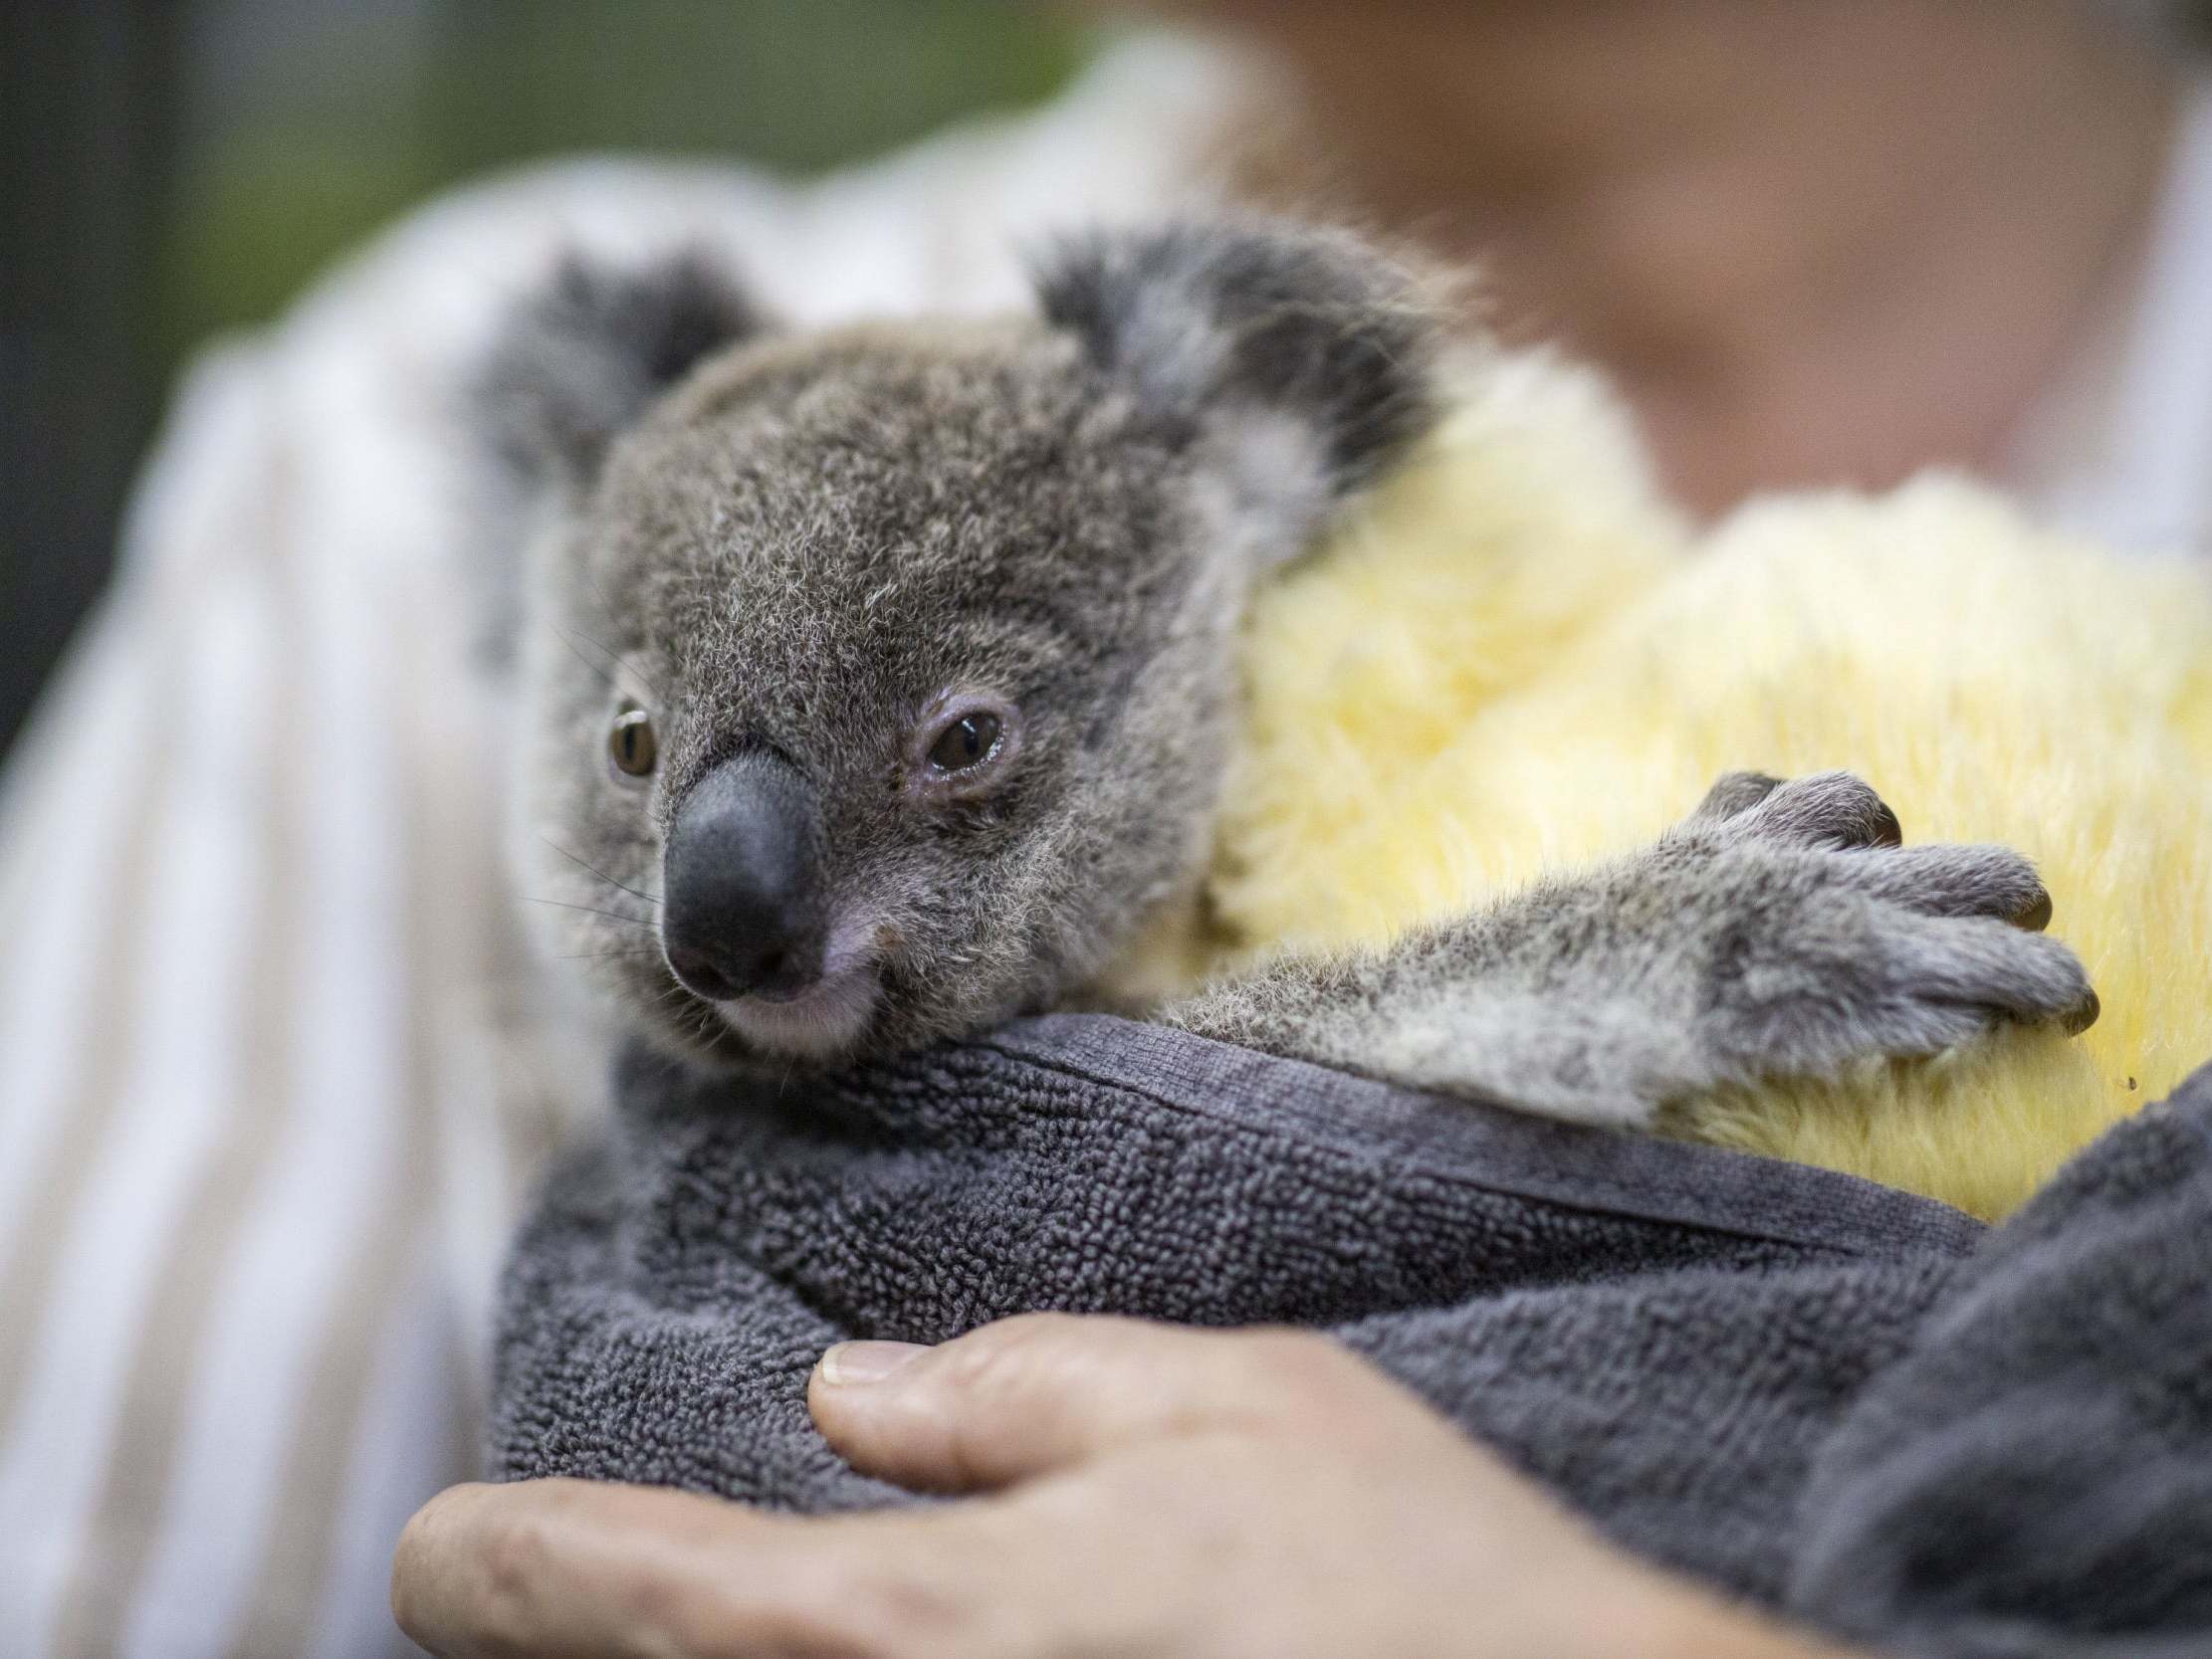 Dozens of koalas found dead or injured at Australian tree-logging site